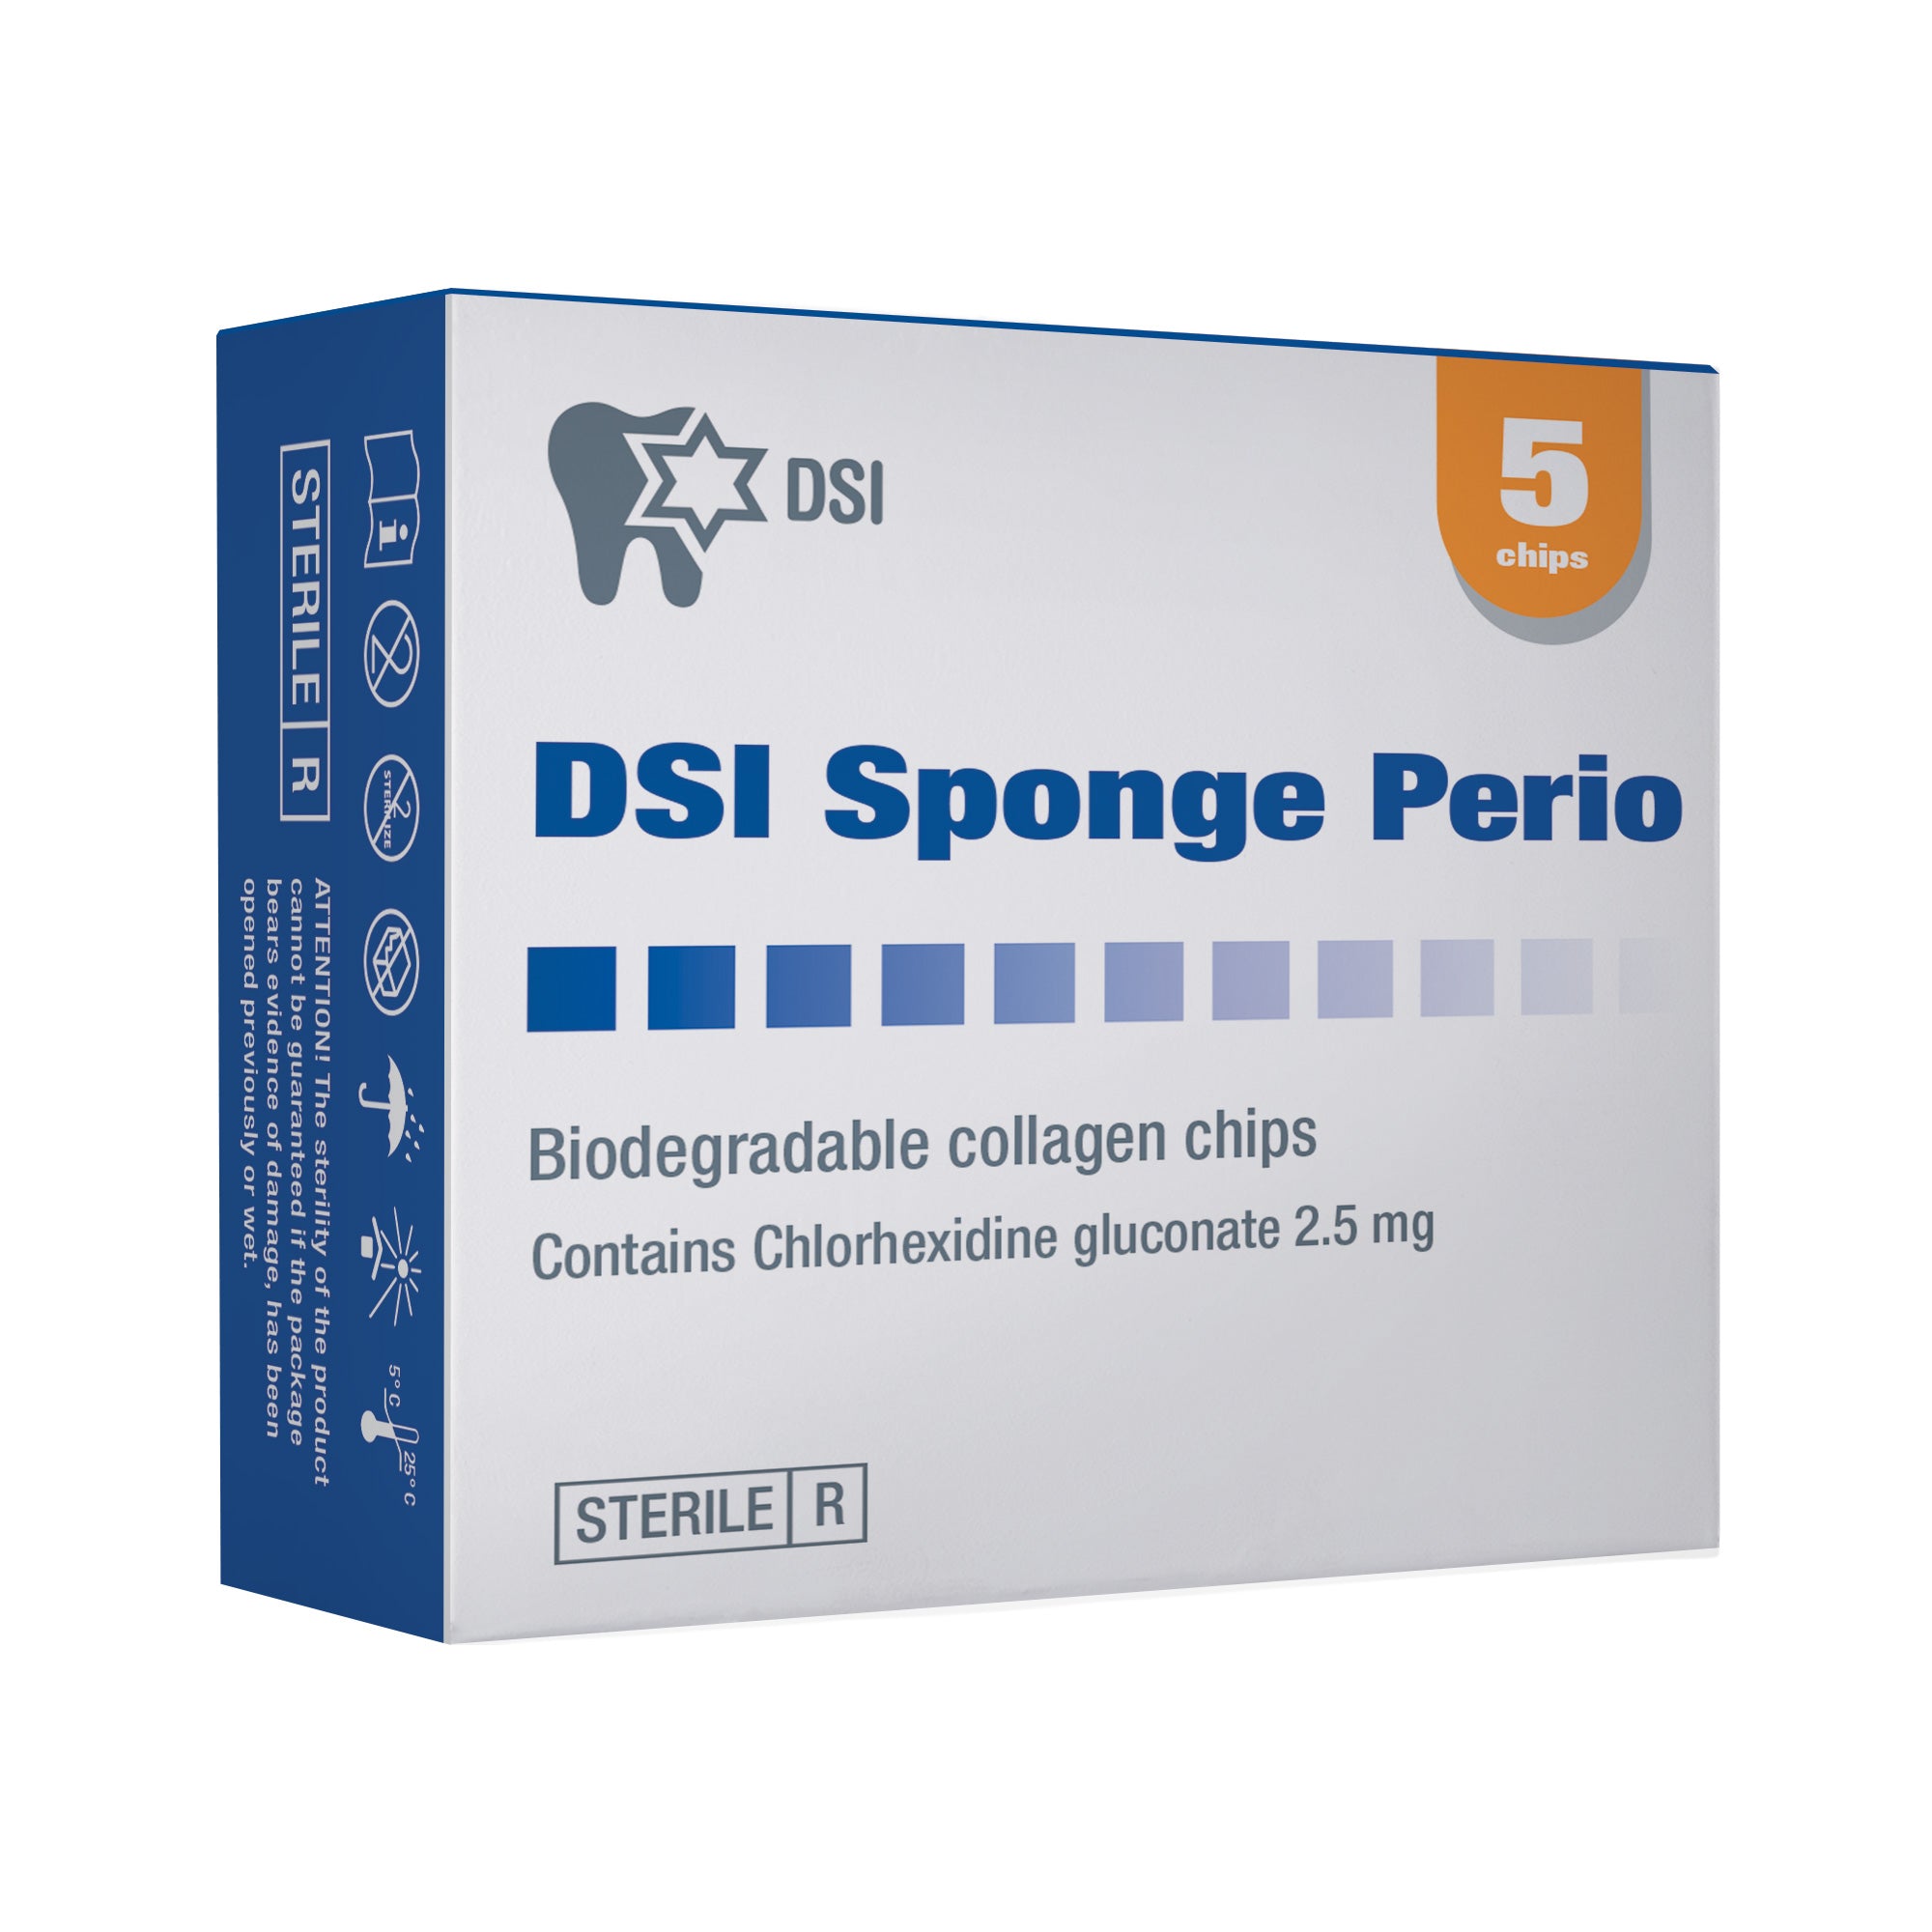 DSI Perio Sponge Collagen Chips 2.5mg of chlorhexidine gluconate